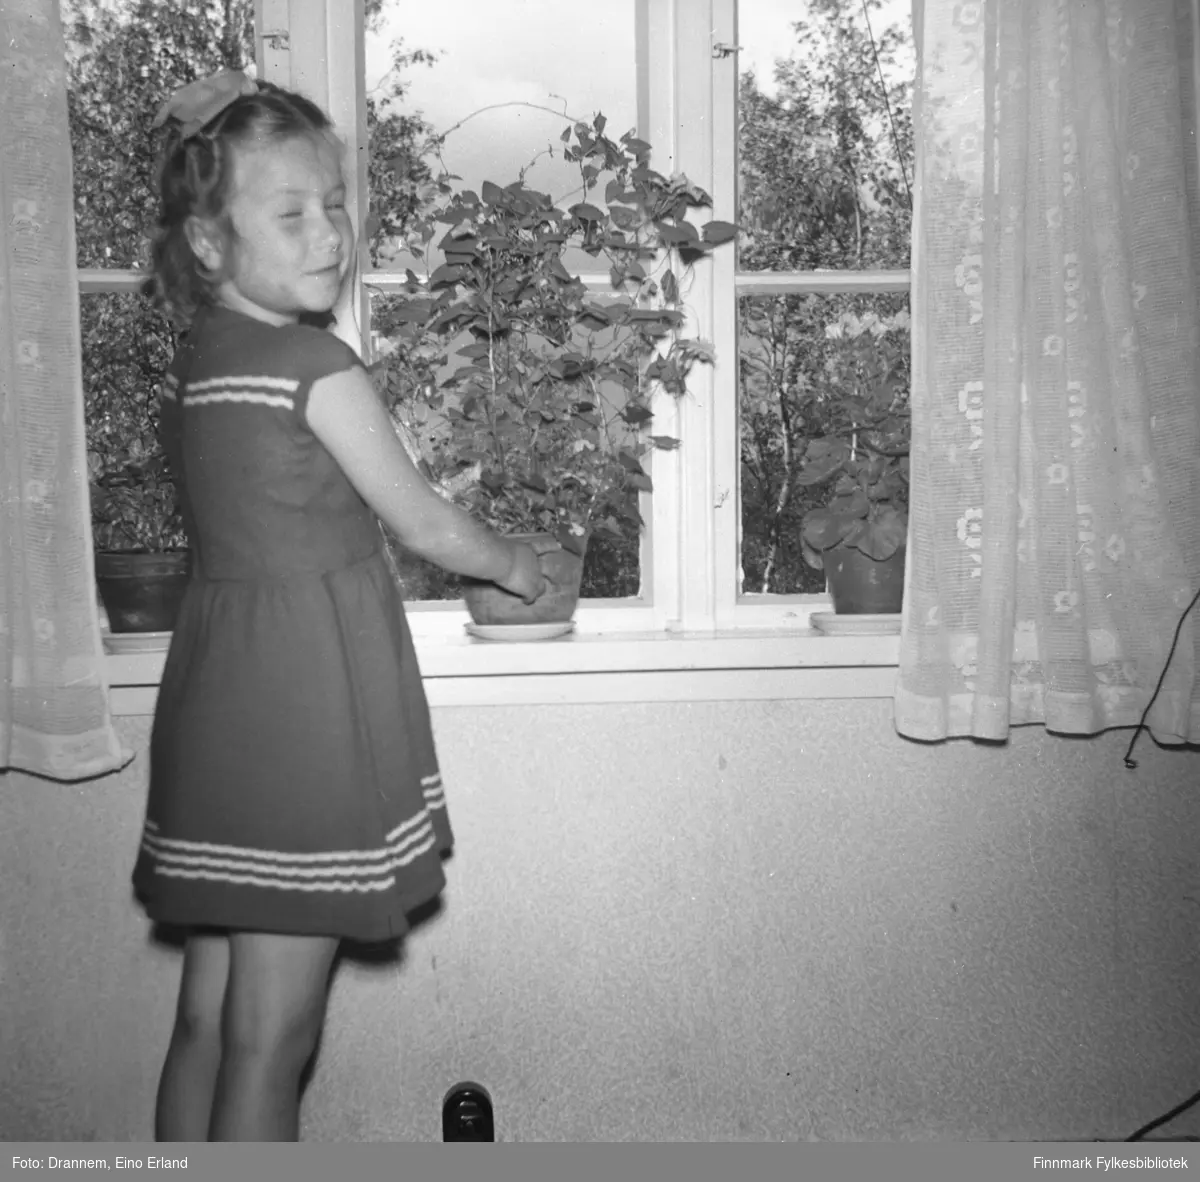 Turid Lillian, fotografert foran vinduet. Man ser stueplanter i vindusposten